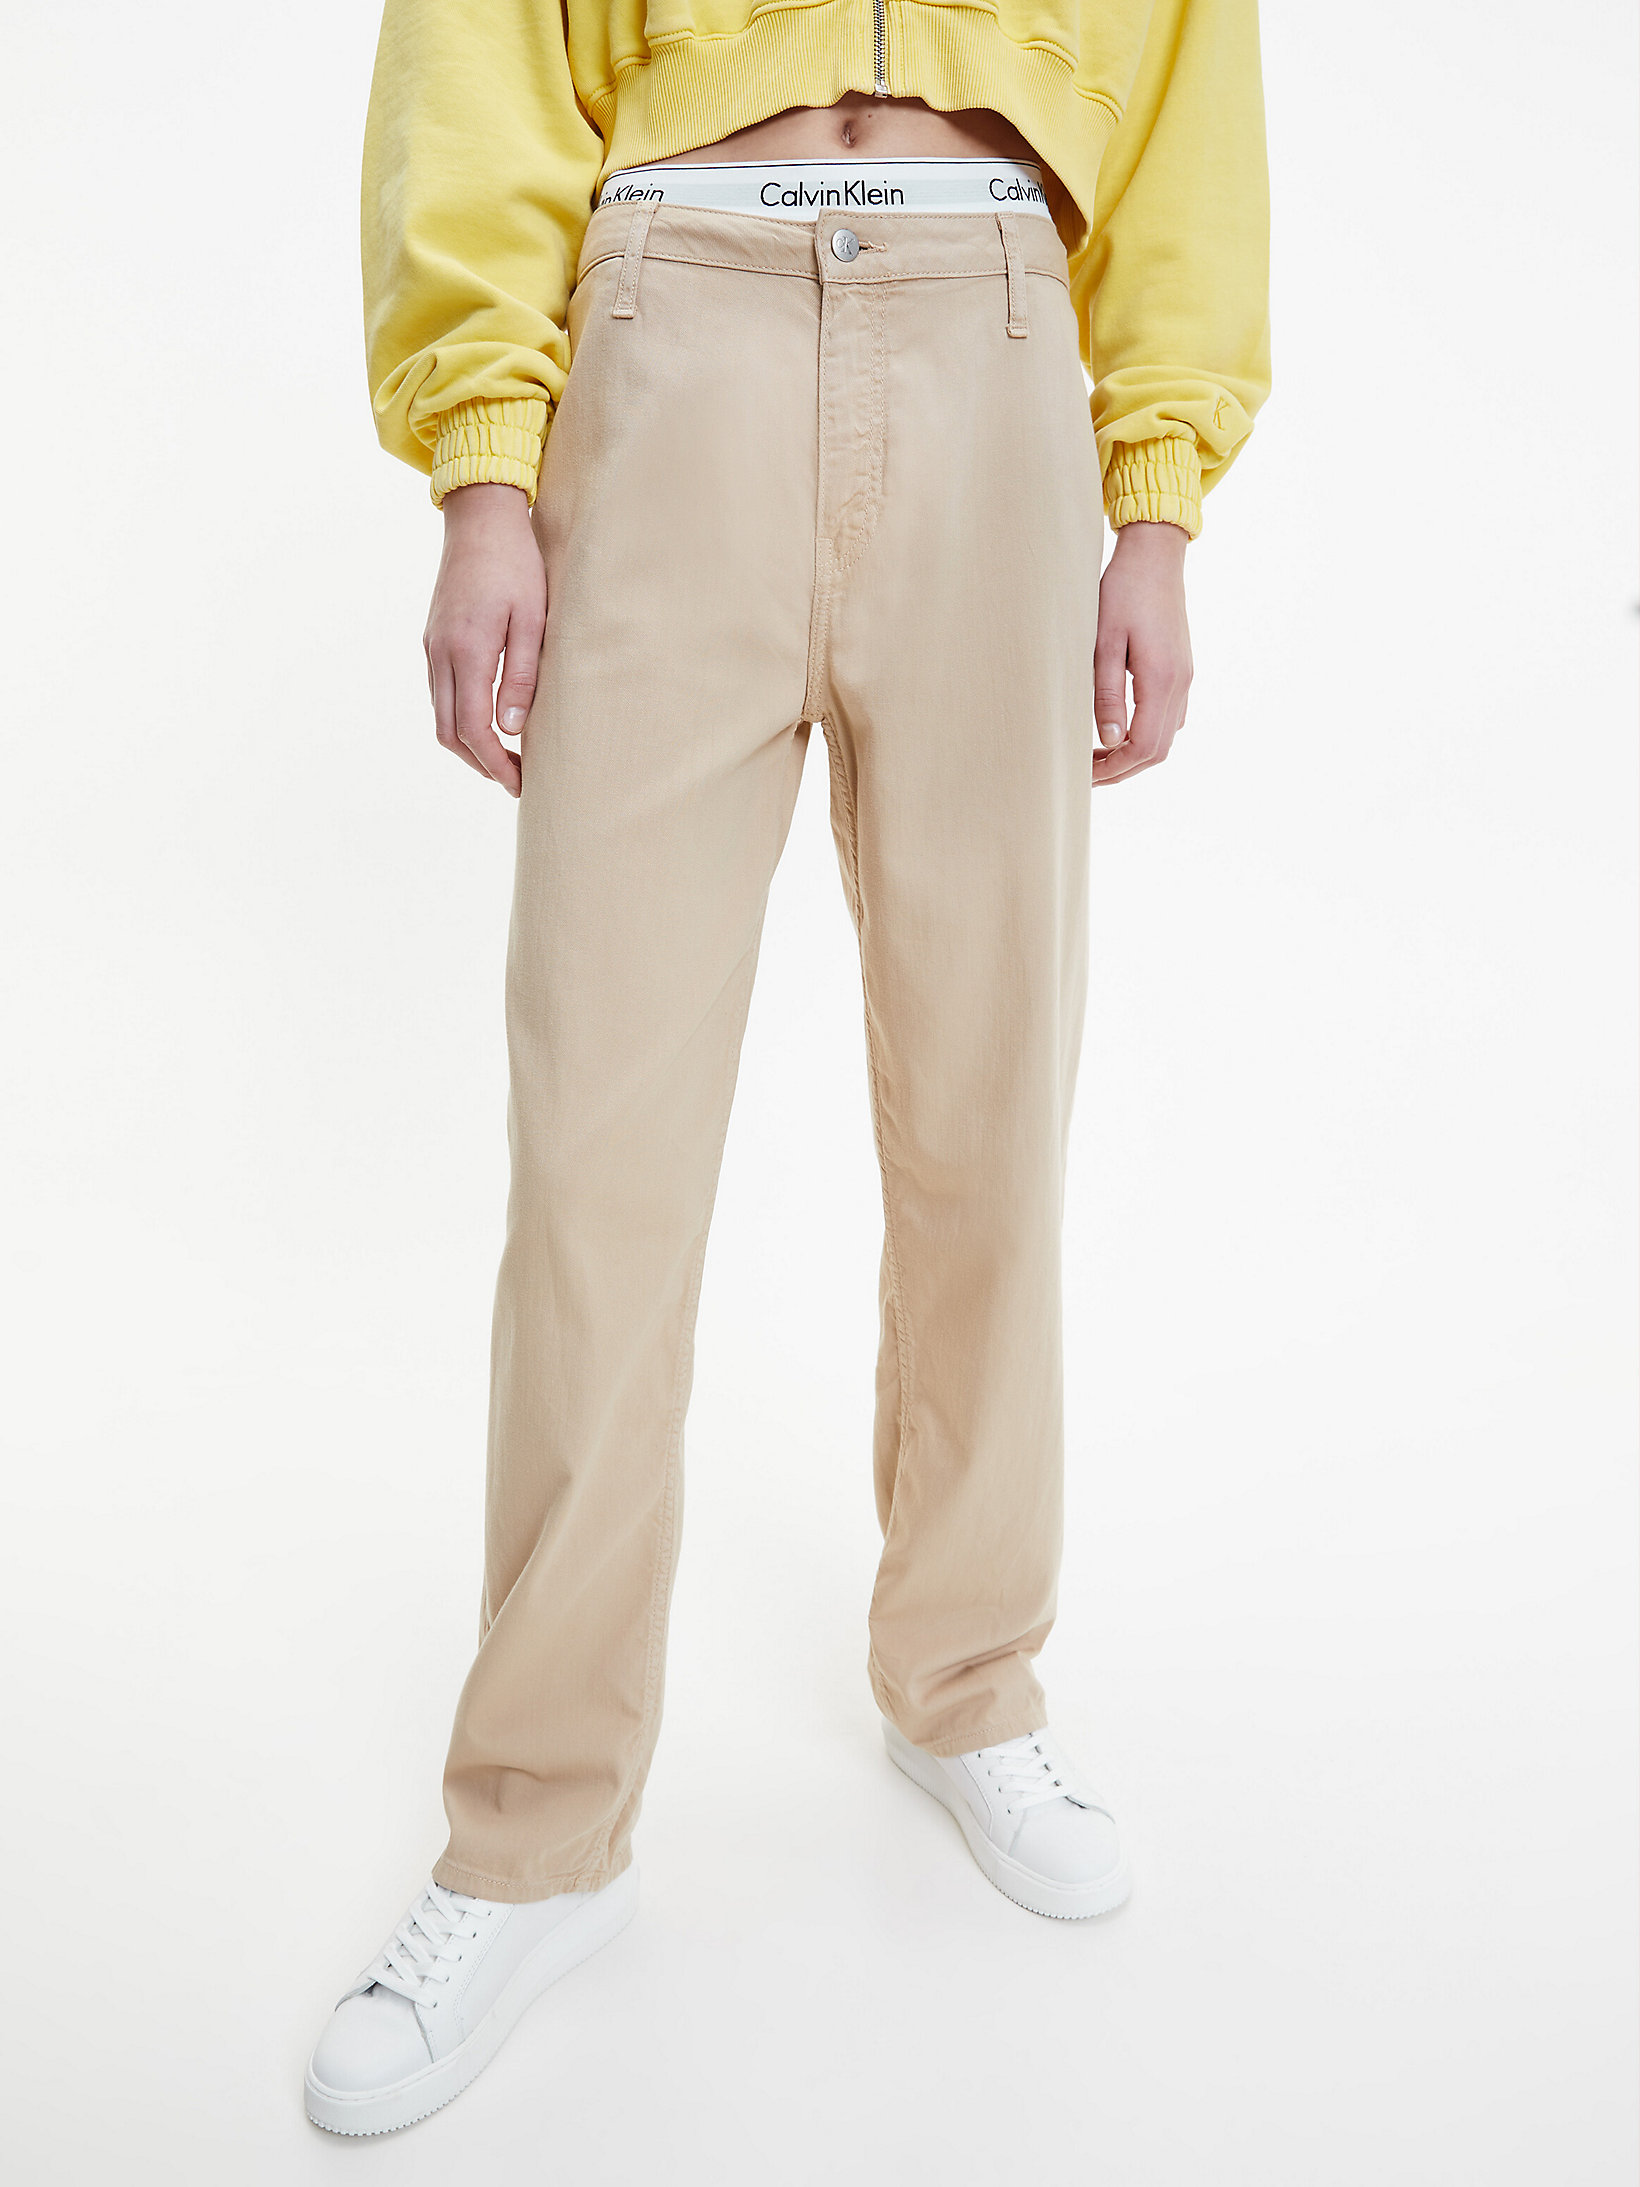 Pantaloni Chino Dritti > Denim Medium > undefined donna > Calvin Klein